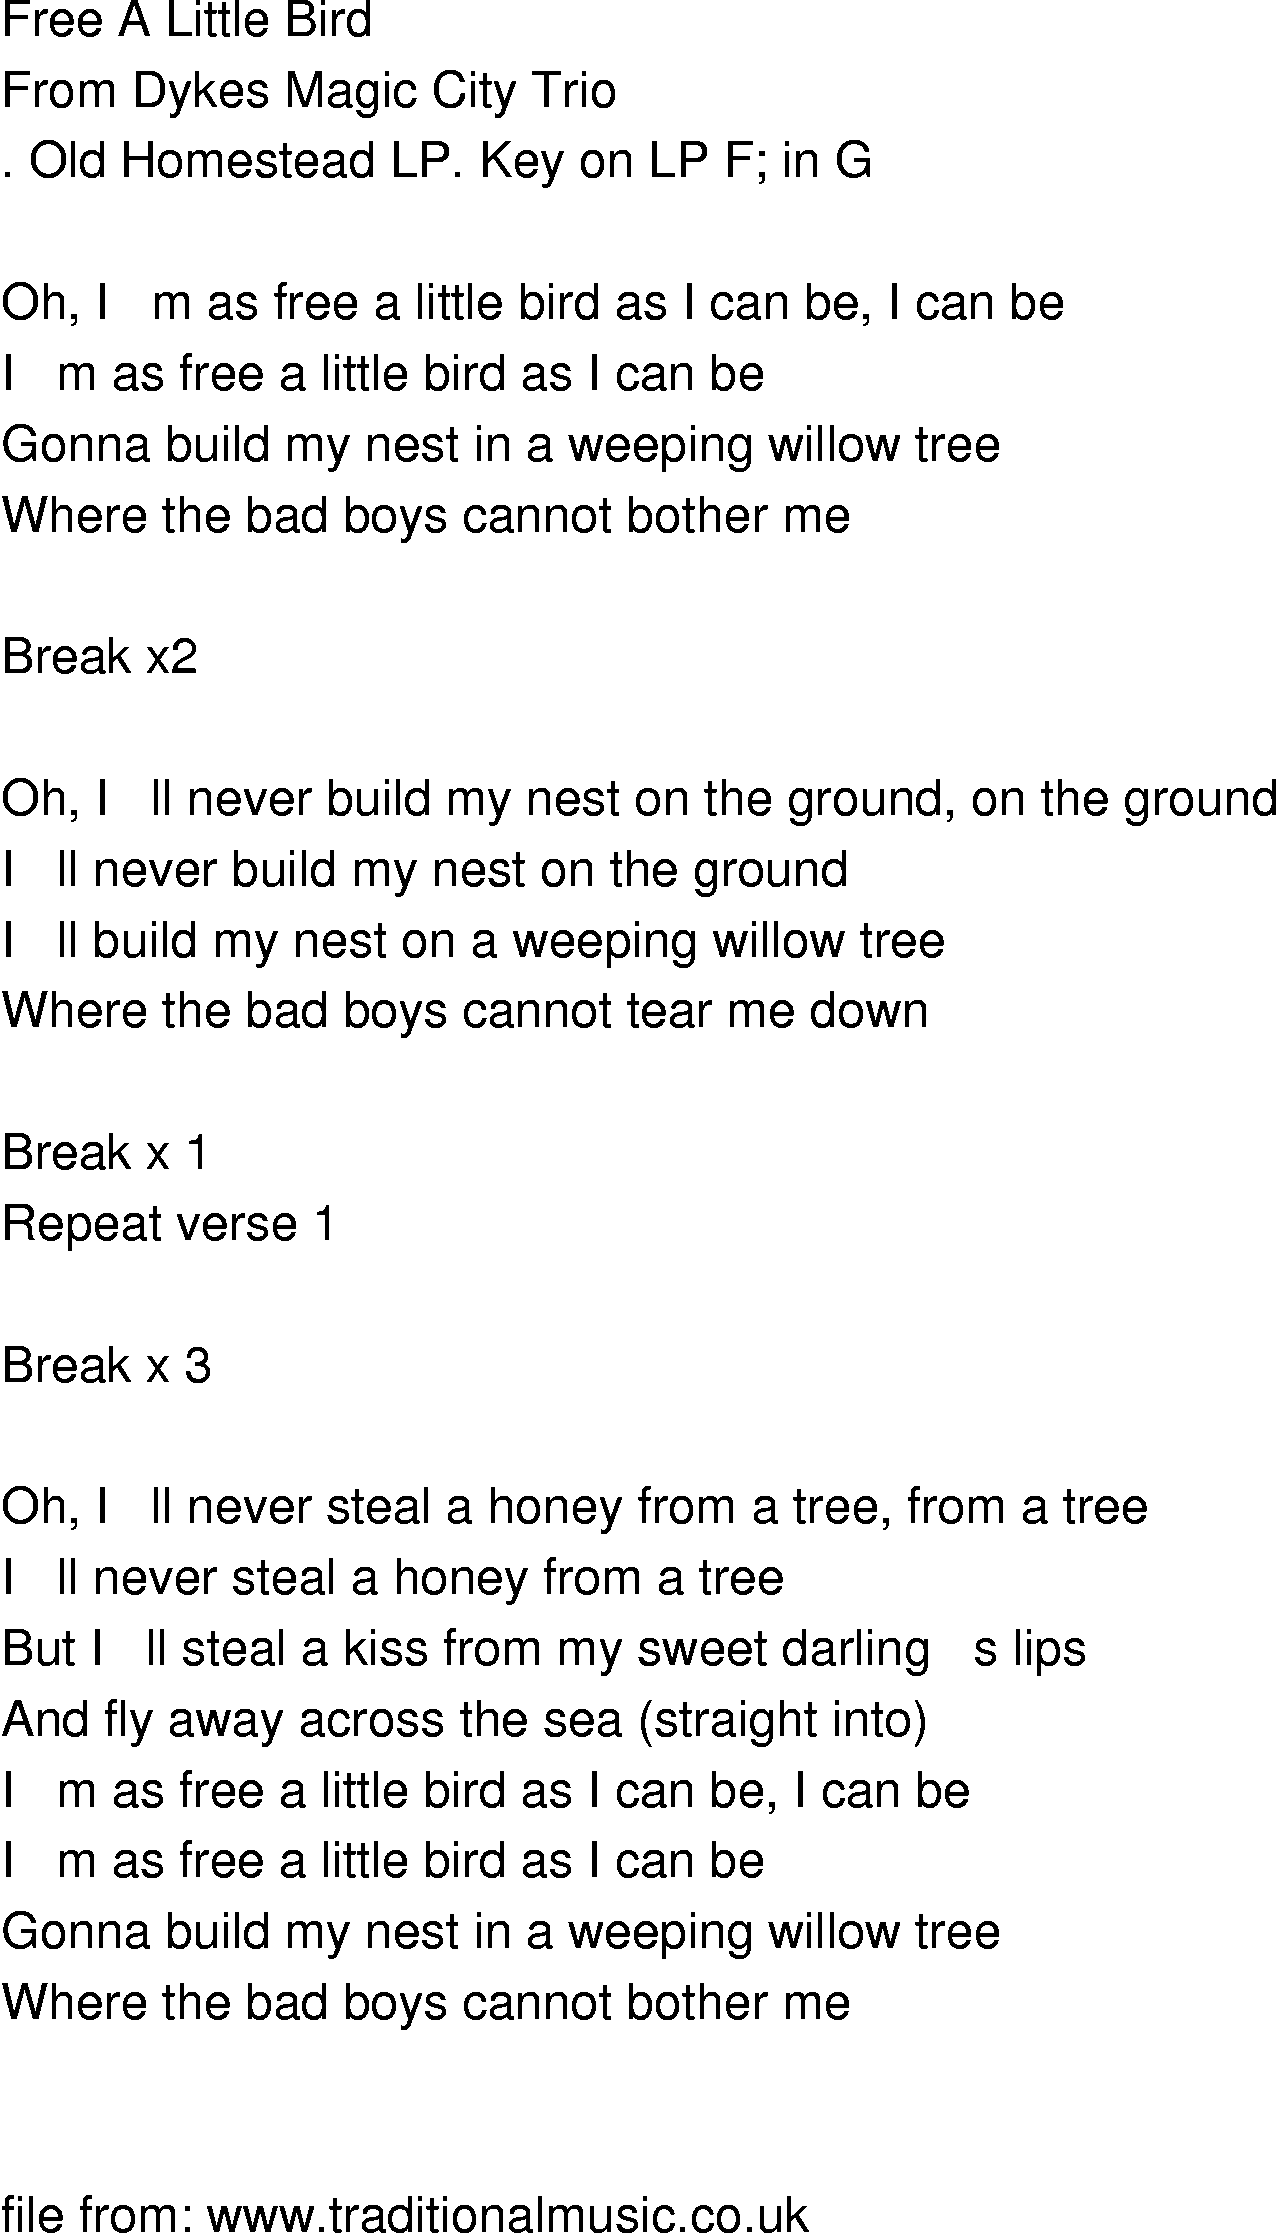 Old-Time (oldtimey) Song Lyrics - free a little bird